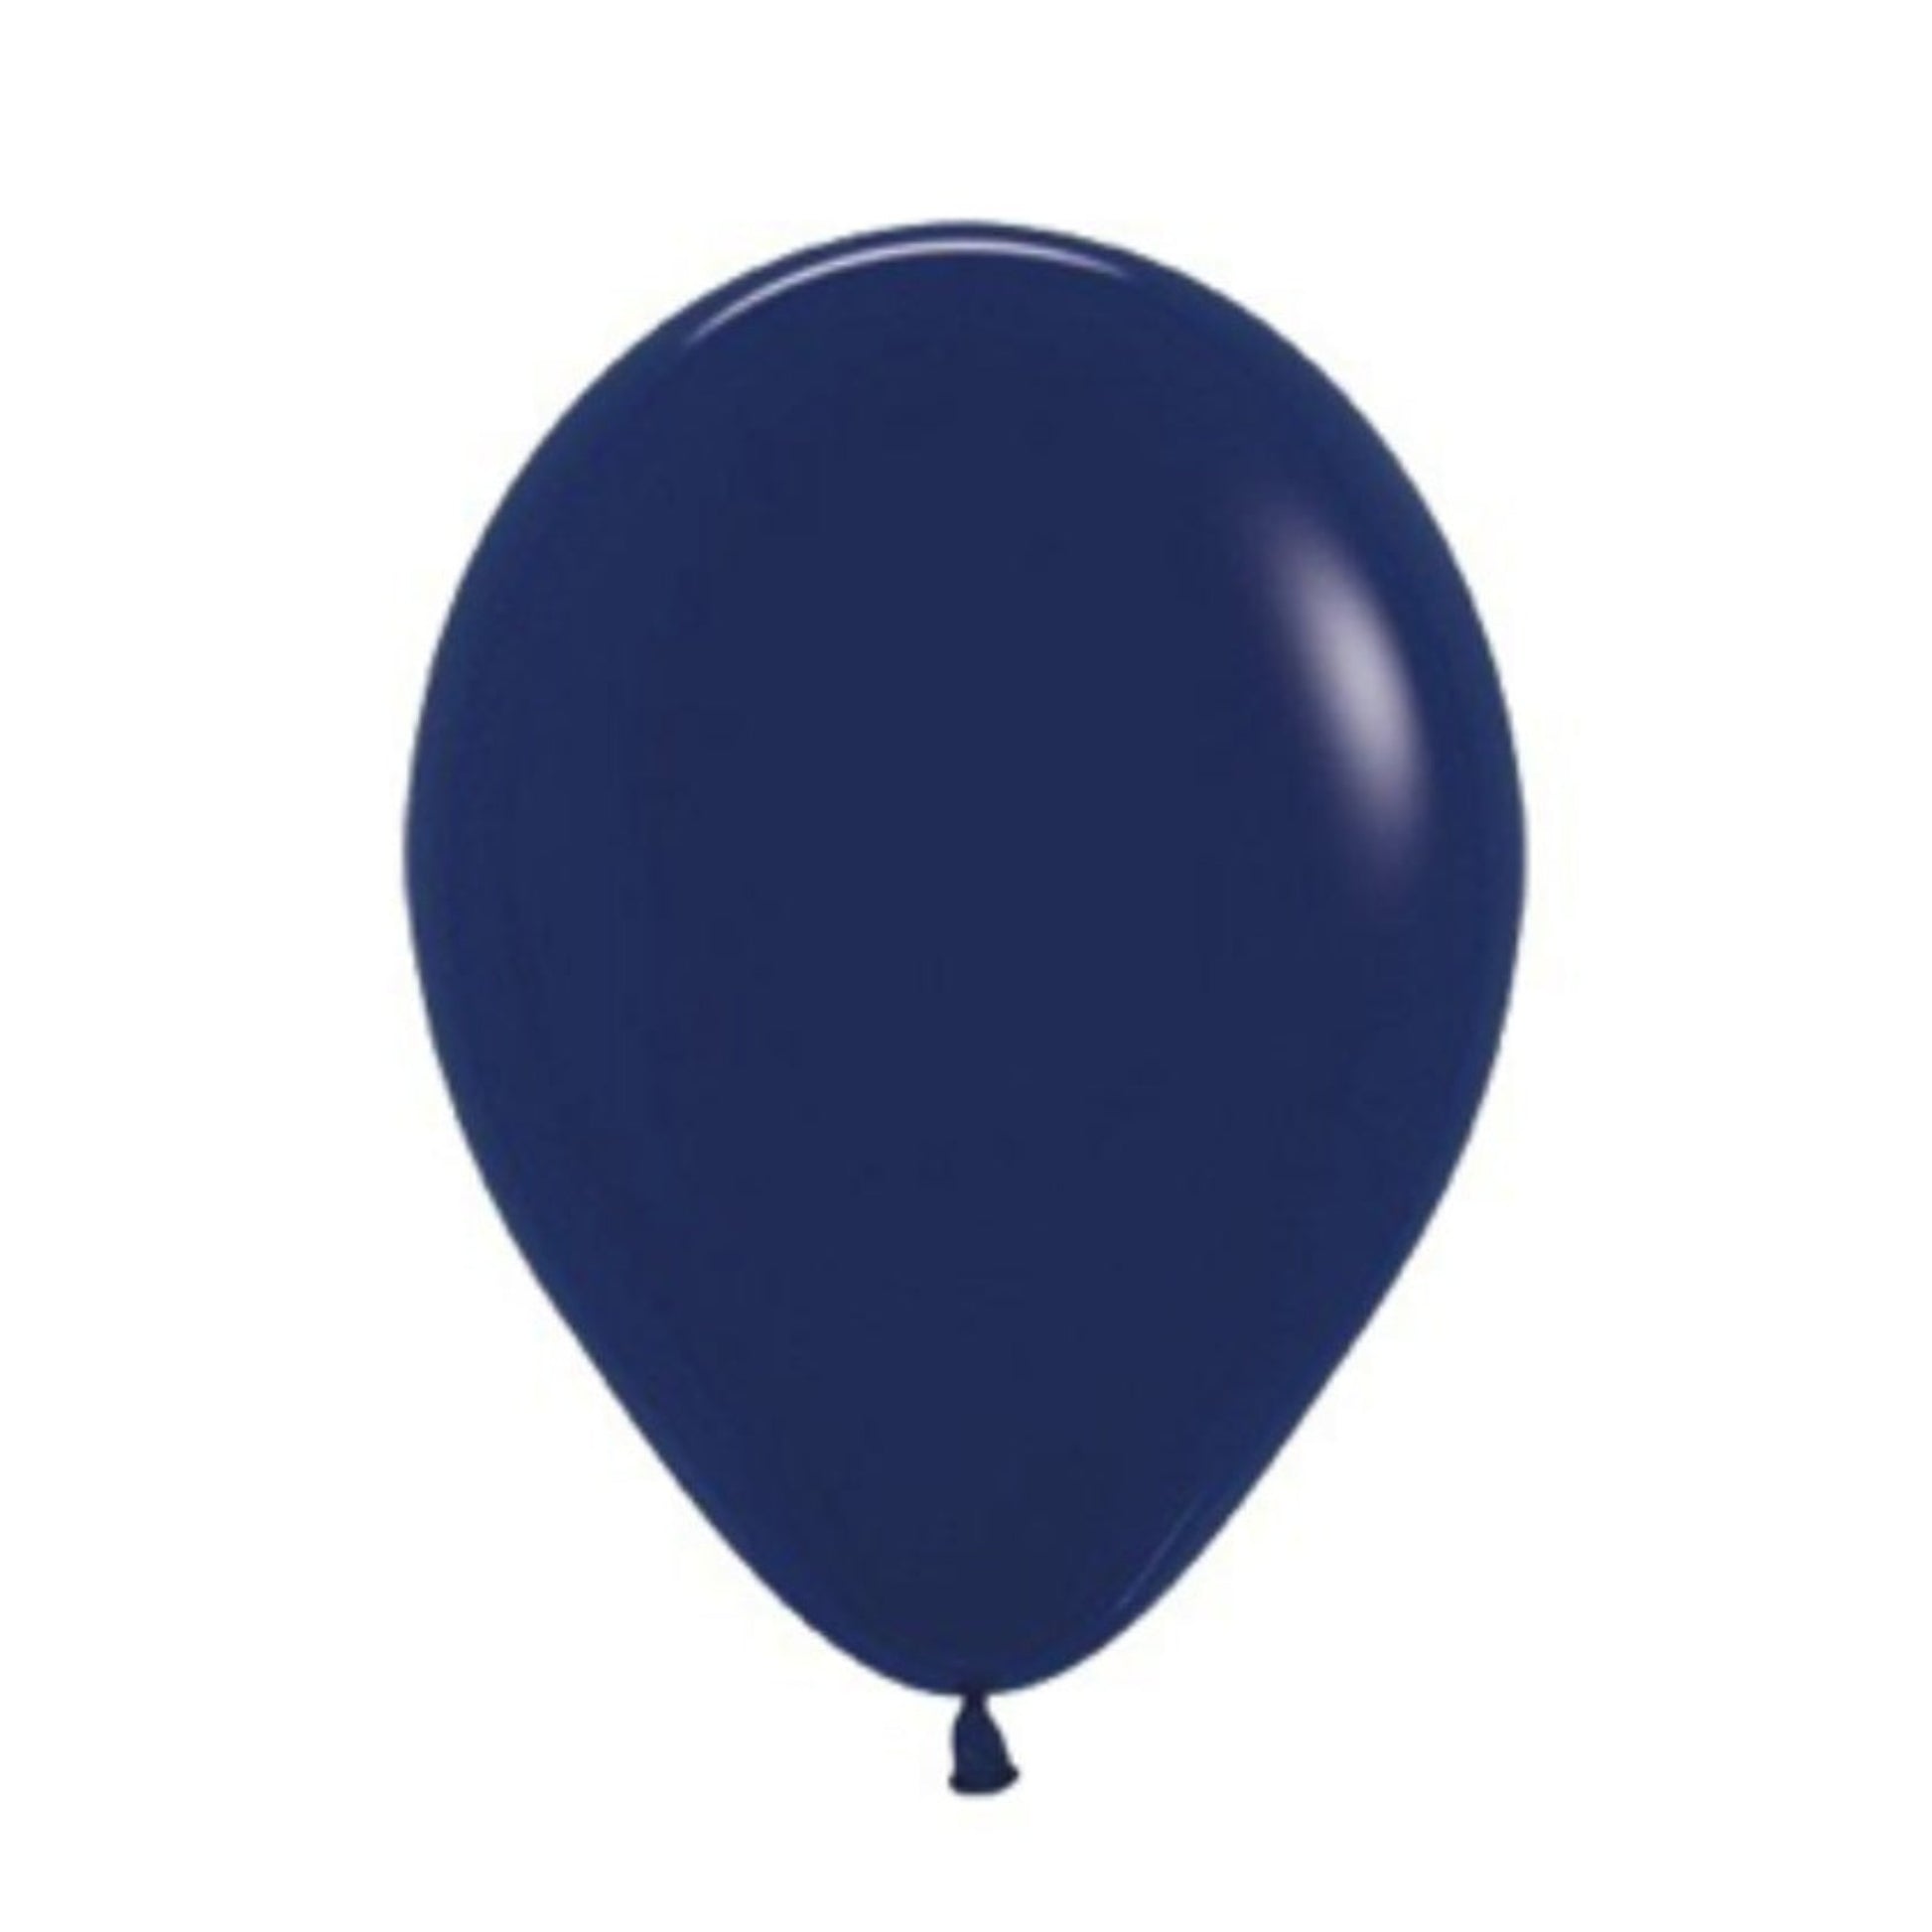 30cm standard navy balloon